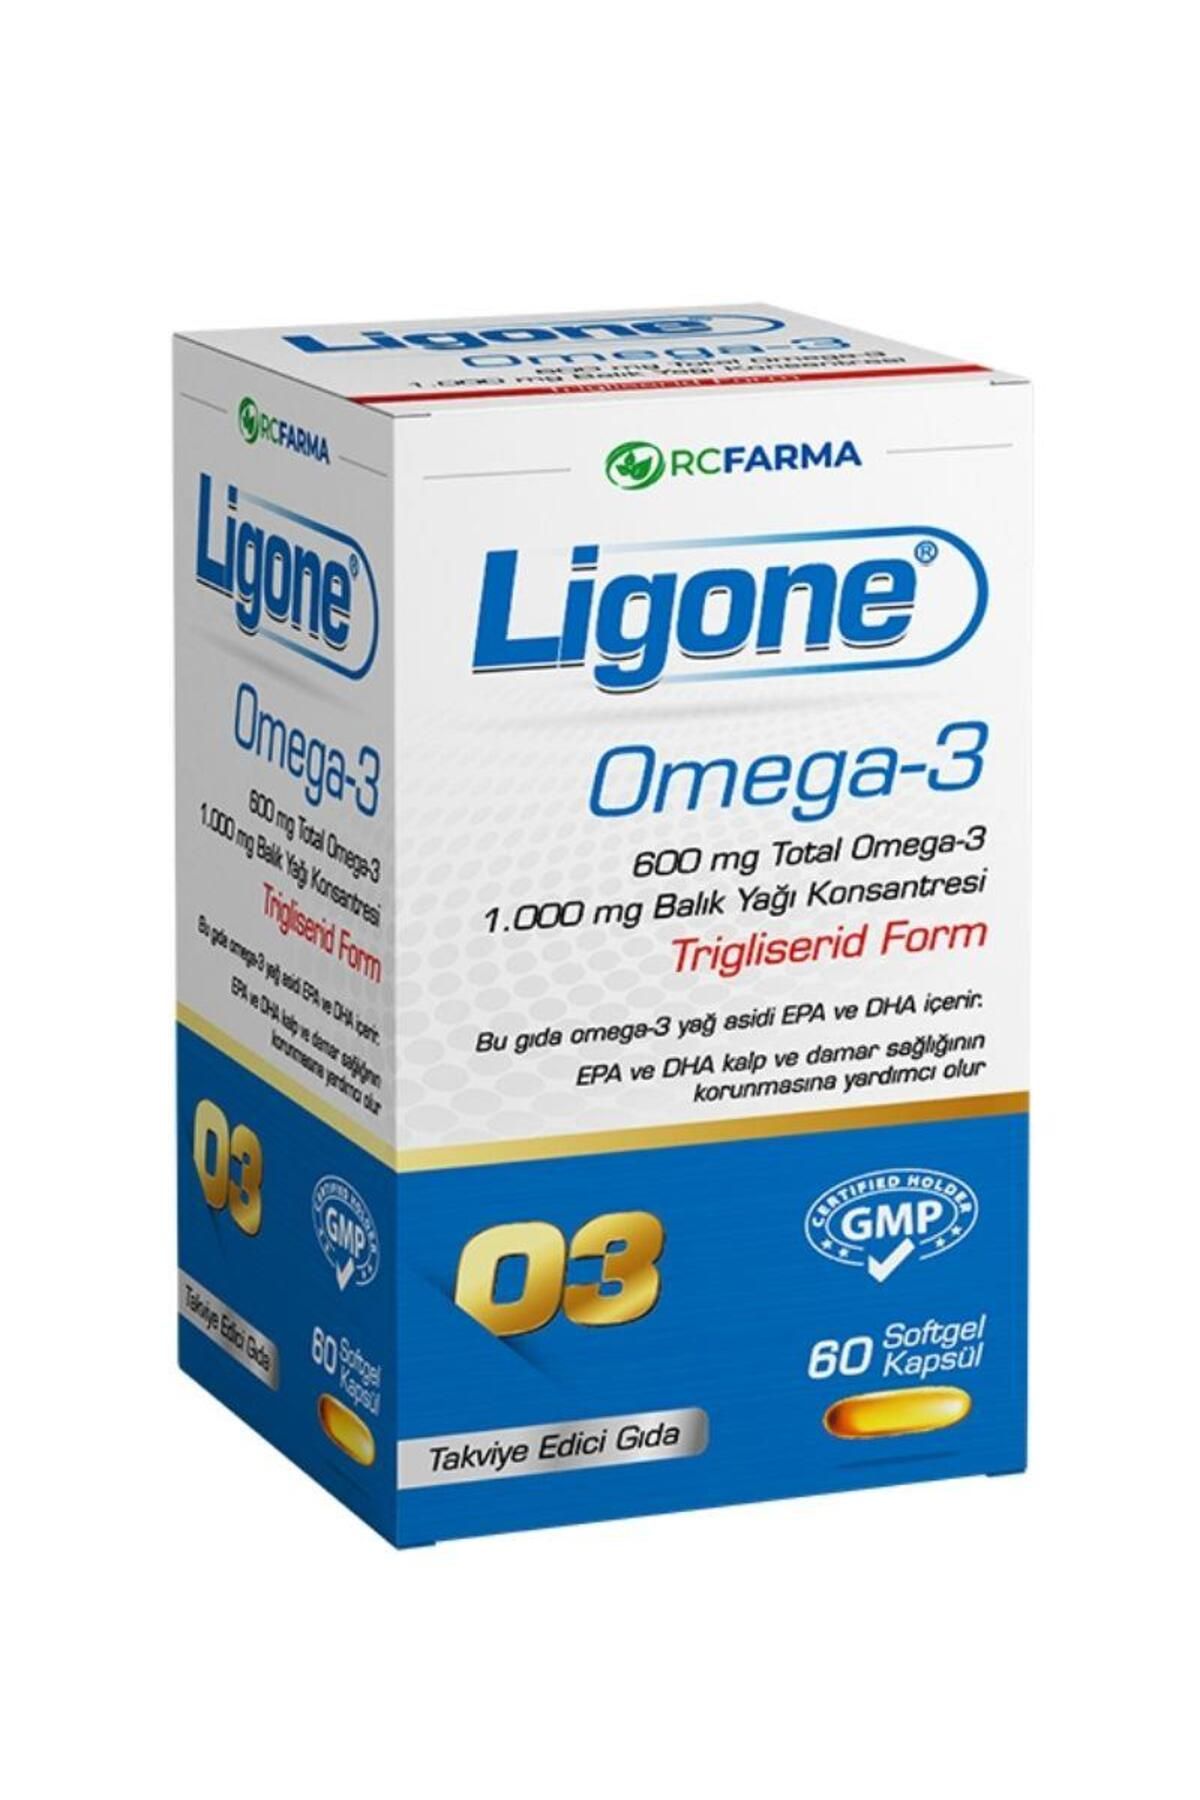 Rcfarma Ligone Omega3 60 Softgel